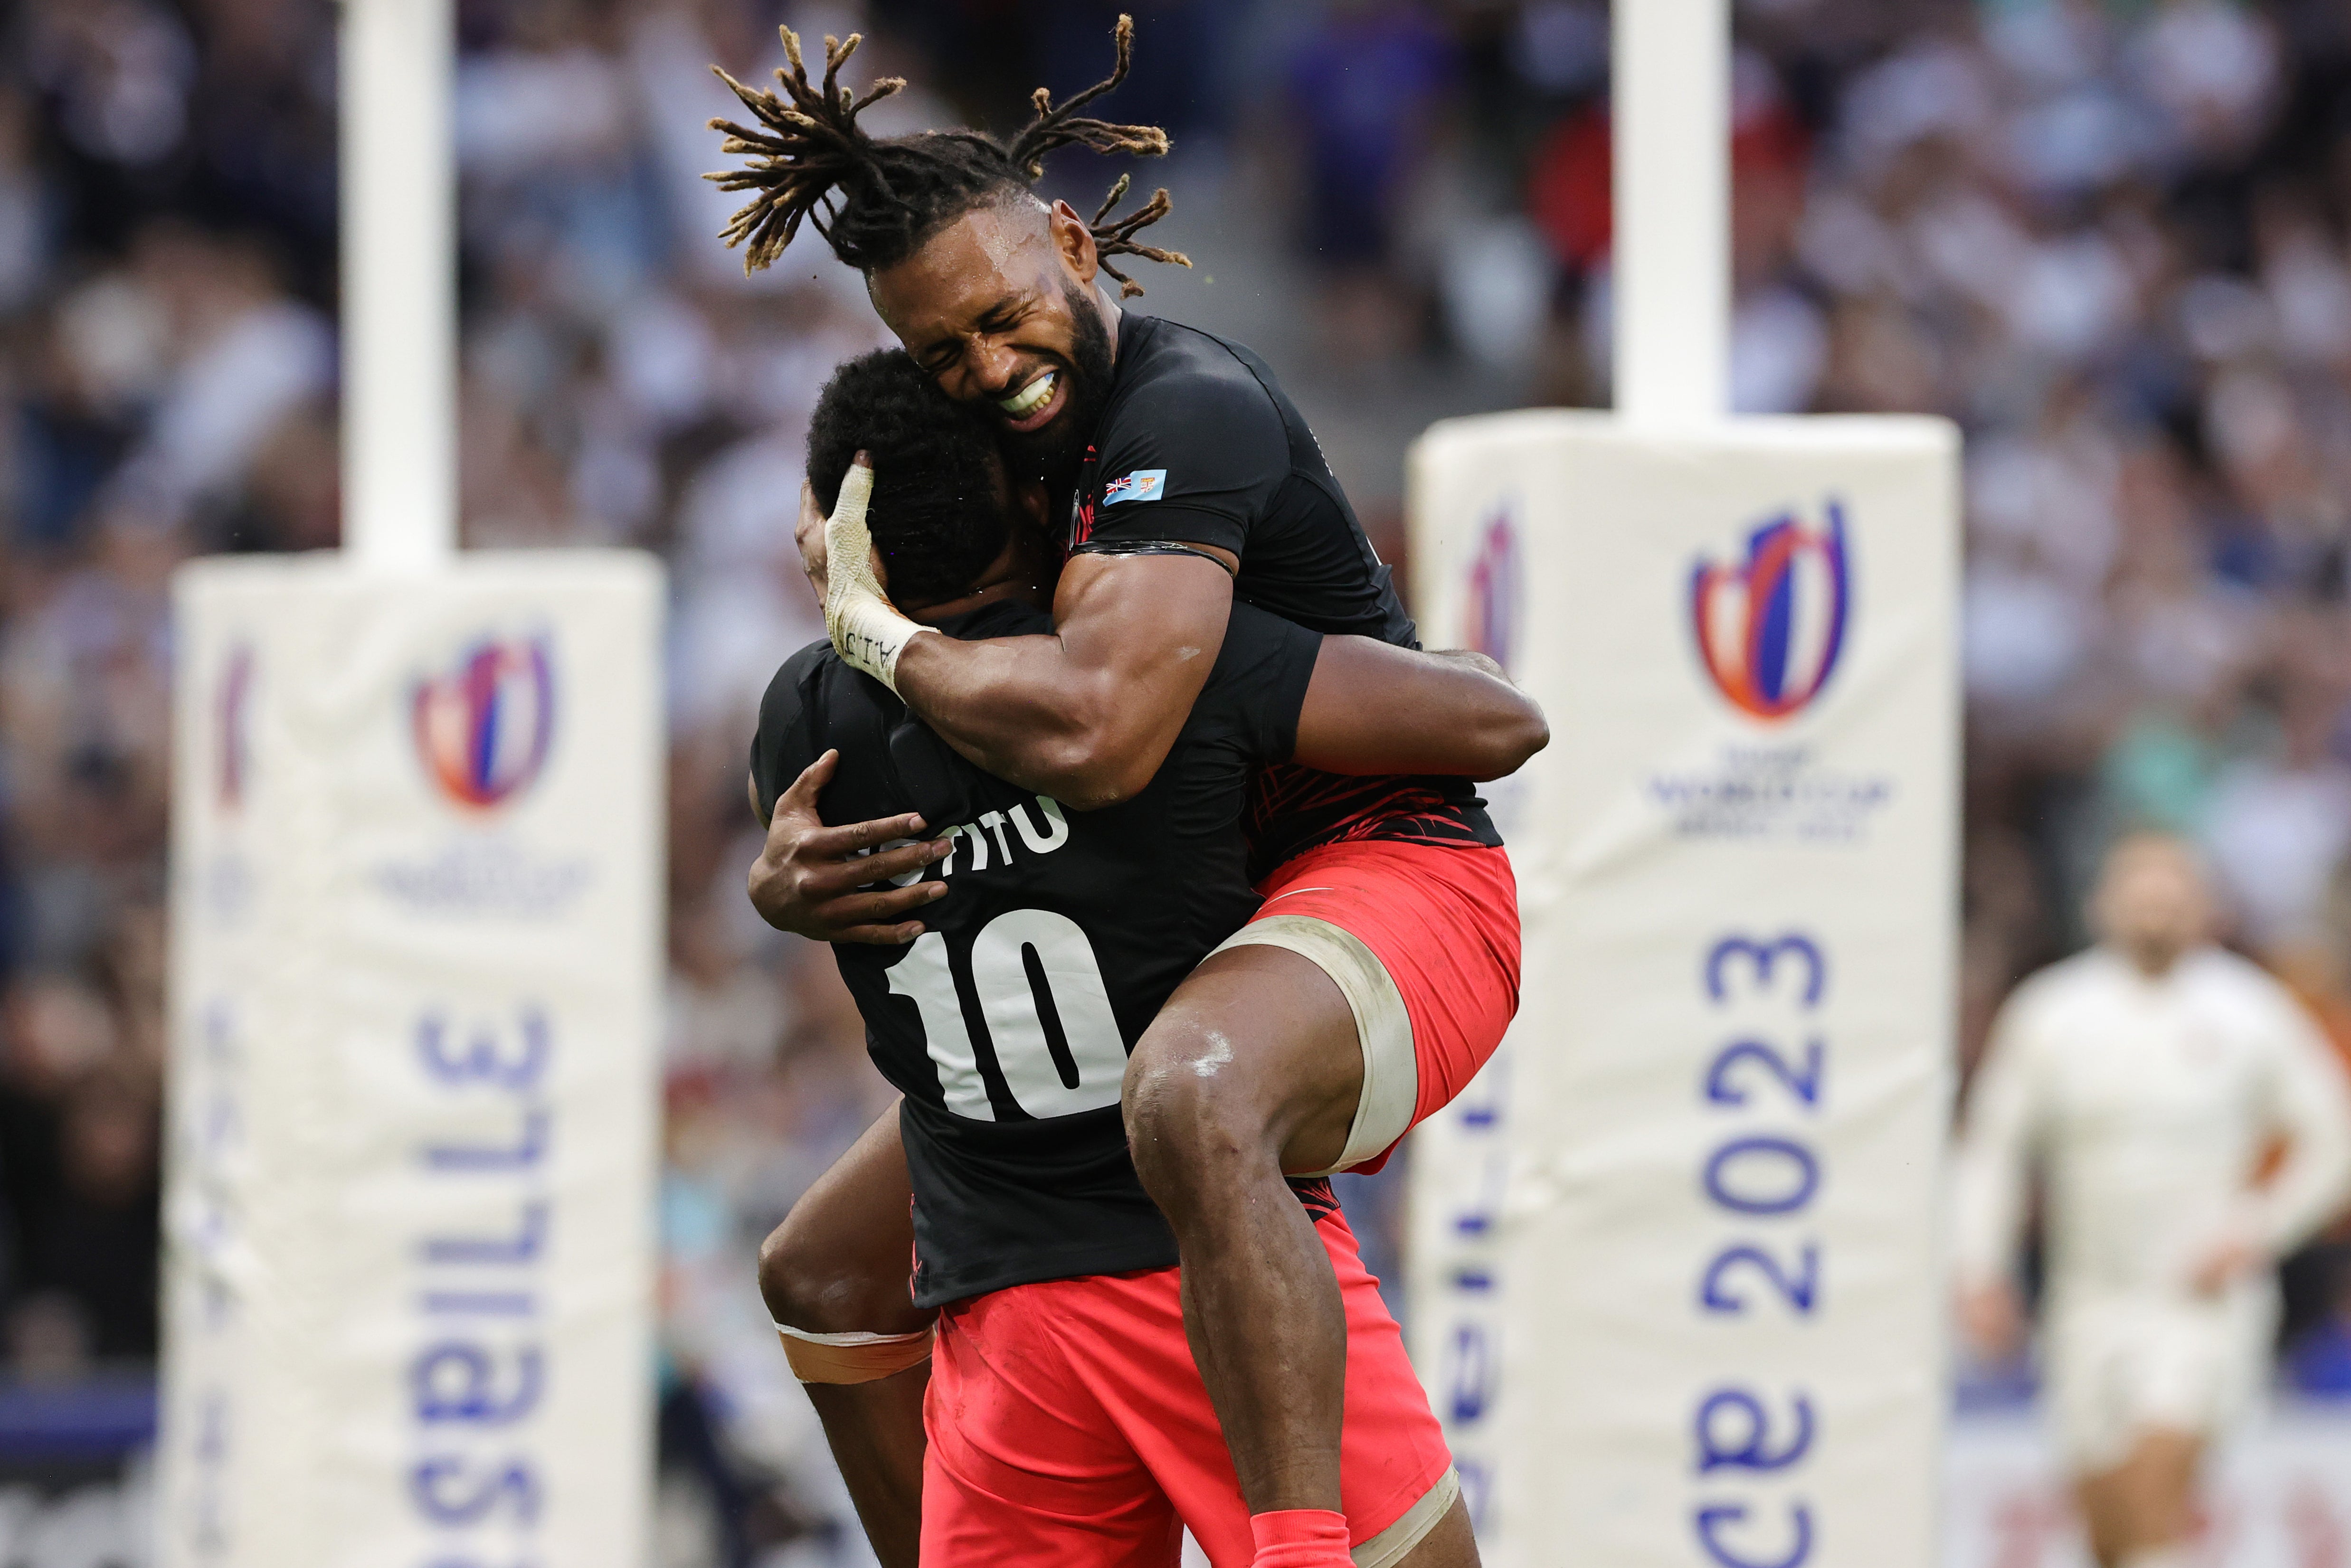 Captain Waisea Nayacalevu embraces Vilimoni Botitu after the fly half’s try against England